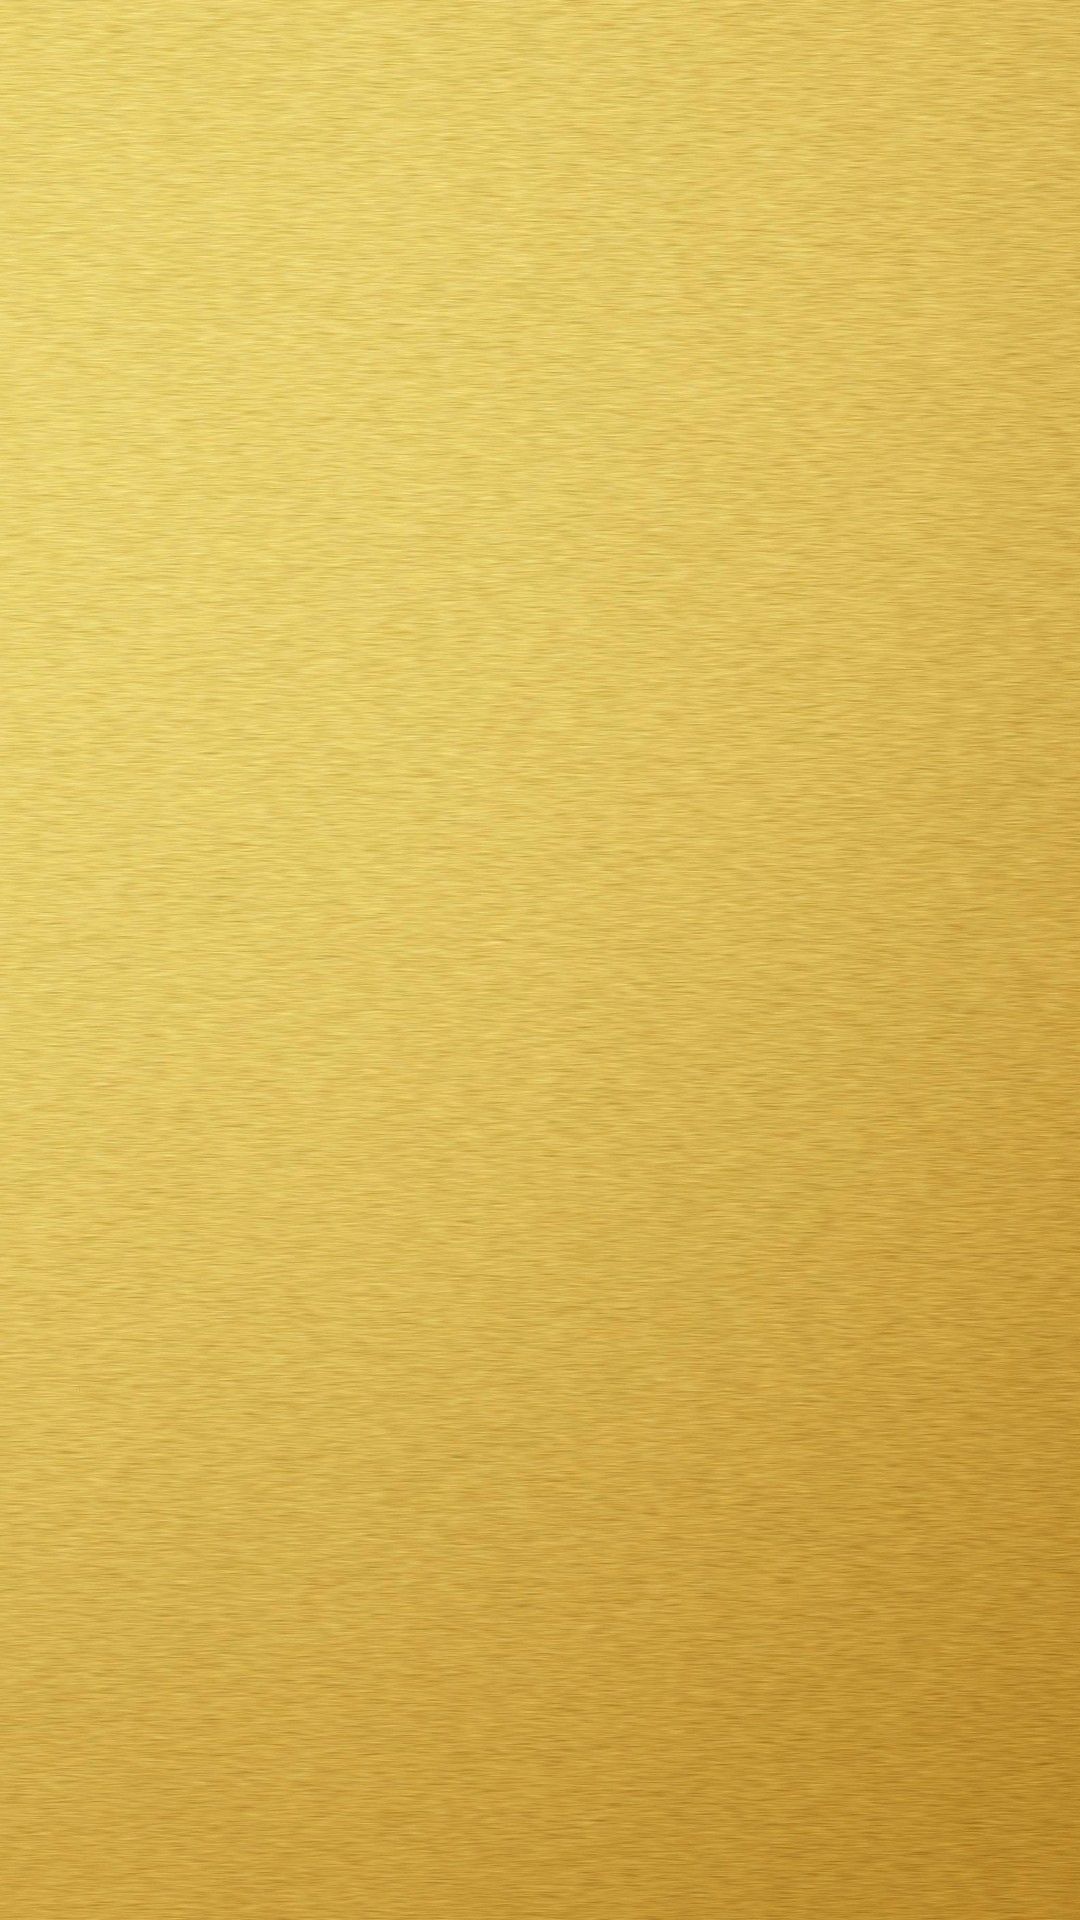 Wallpaper Plain Gold iPhone iPhone Wallpaper. Gold wallpaper, Gold wallpaper colour, Best iphone wallpaper